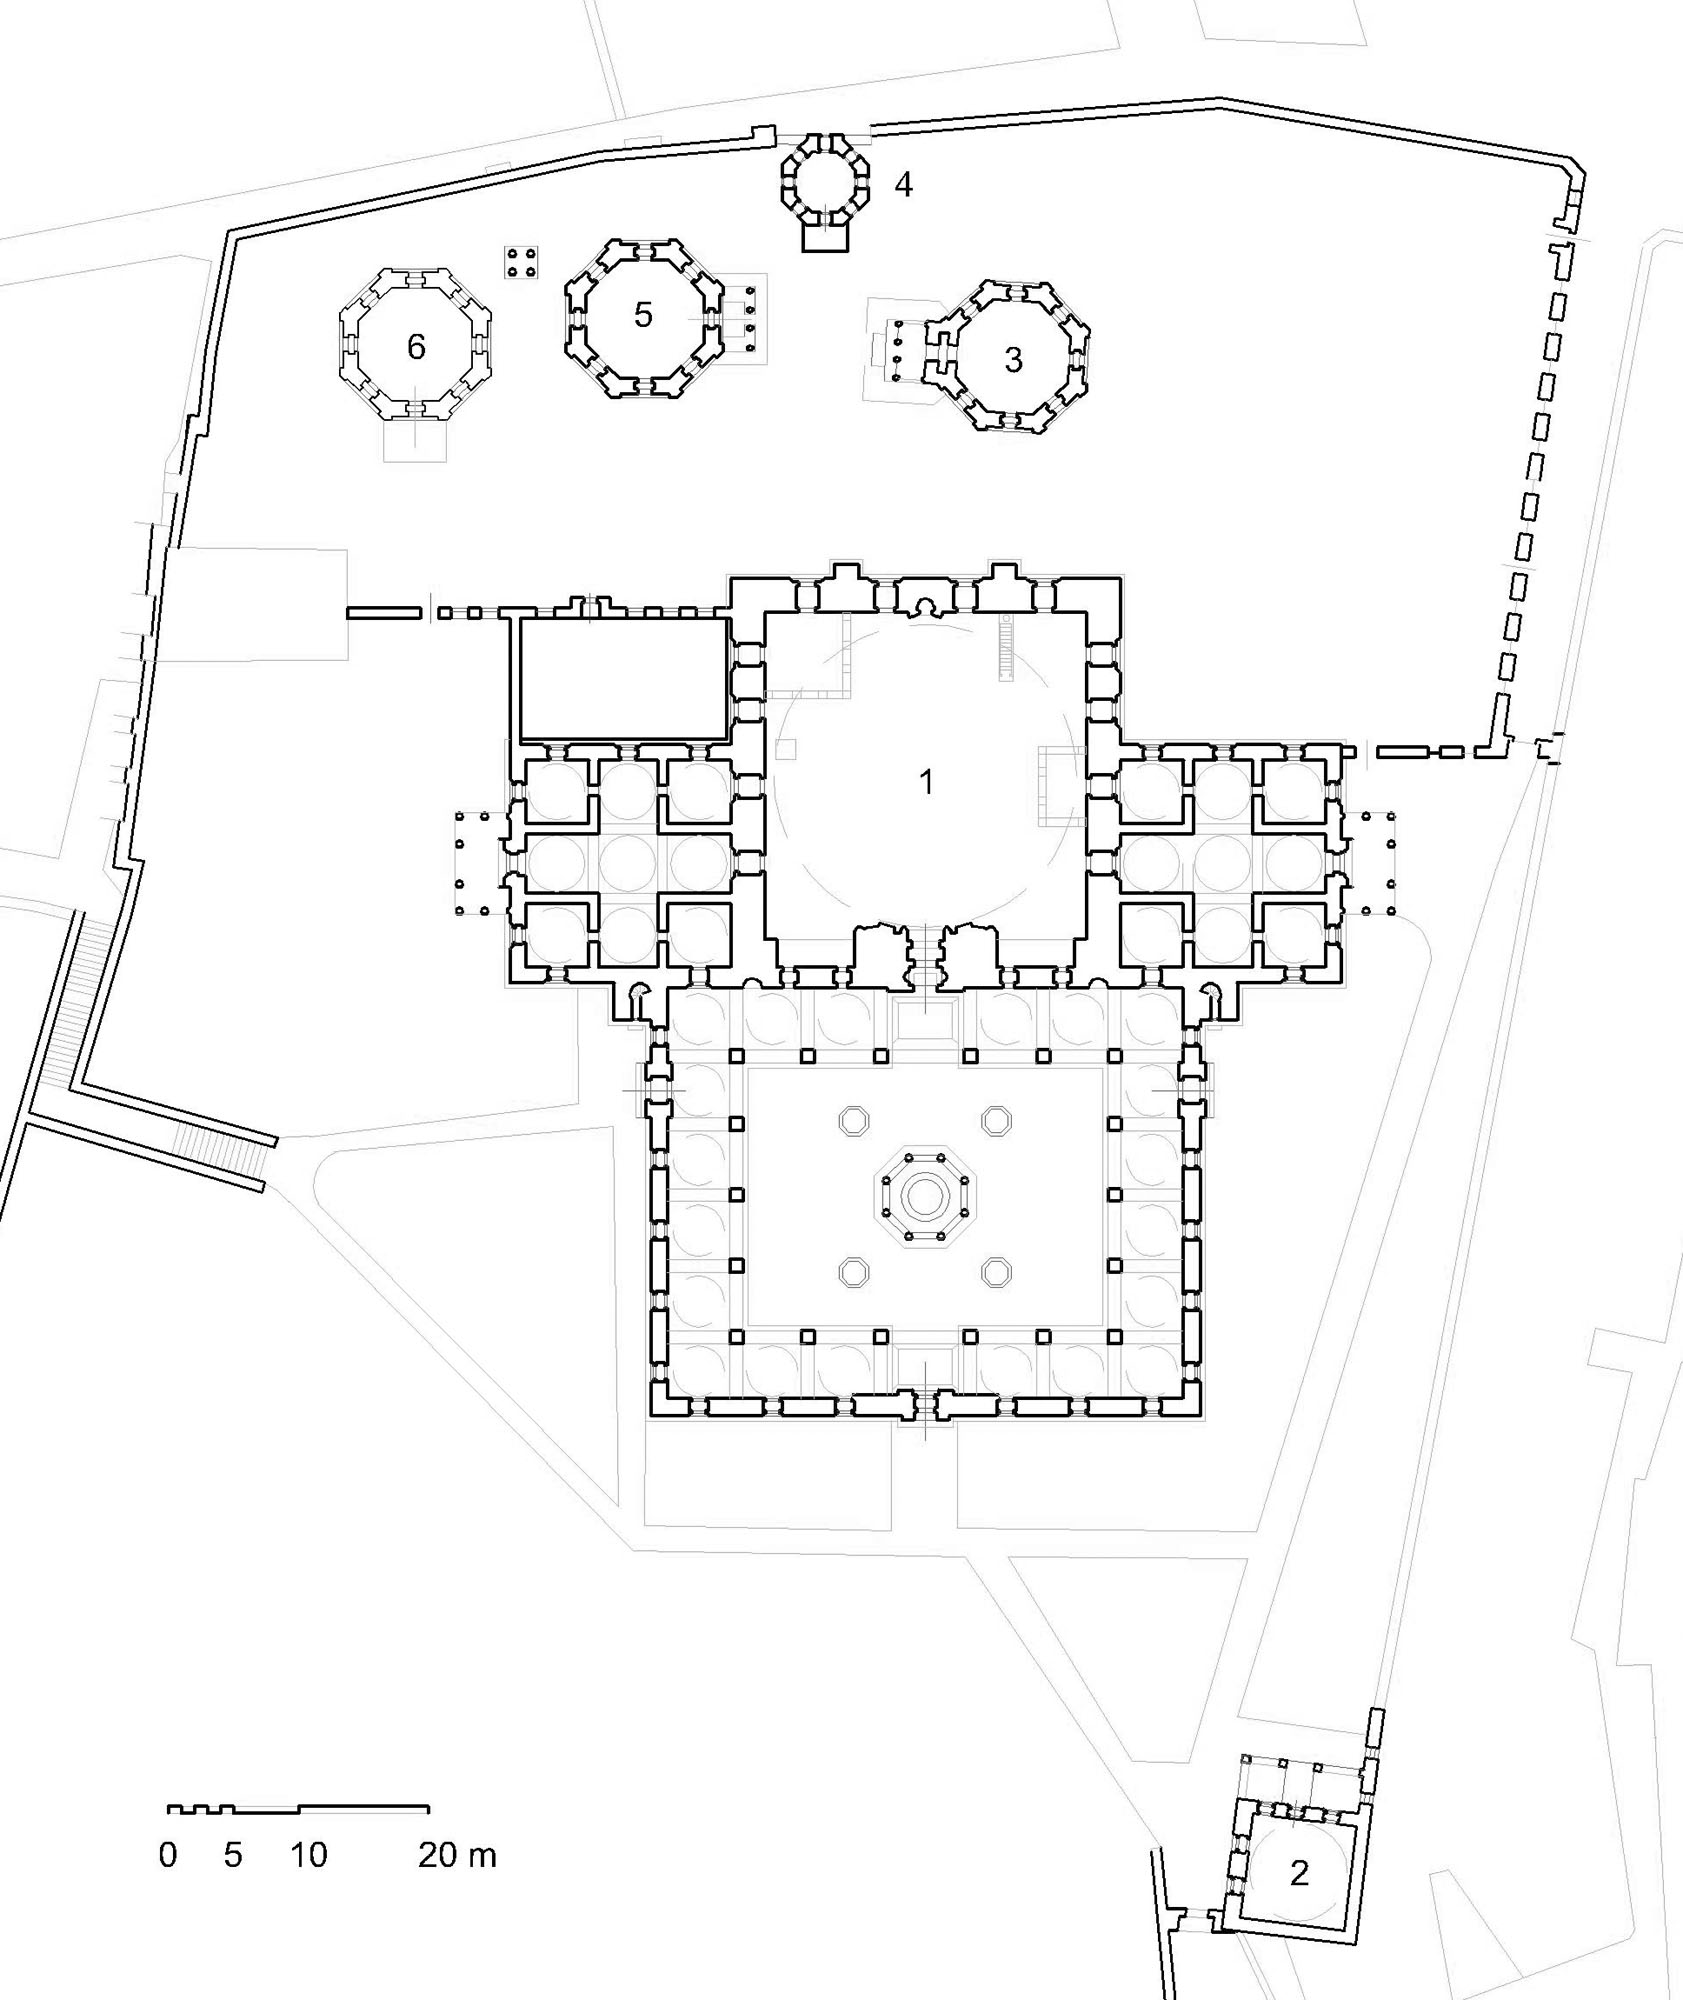 Floor plan of complex showing (1) mosque, (2) elementary school, (3) mausoleum of Selim I, (4) mausoleum of Hafsa Sultan (demolished), (5) mausoleum of Sultan Süleyman's children, (6) mausoleum of Sultan Abdülmecid (1861)